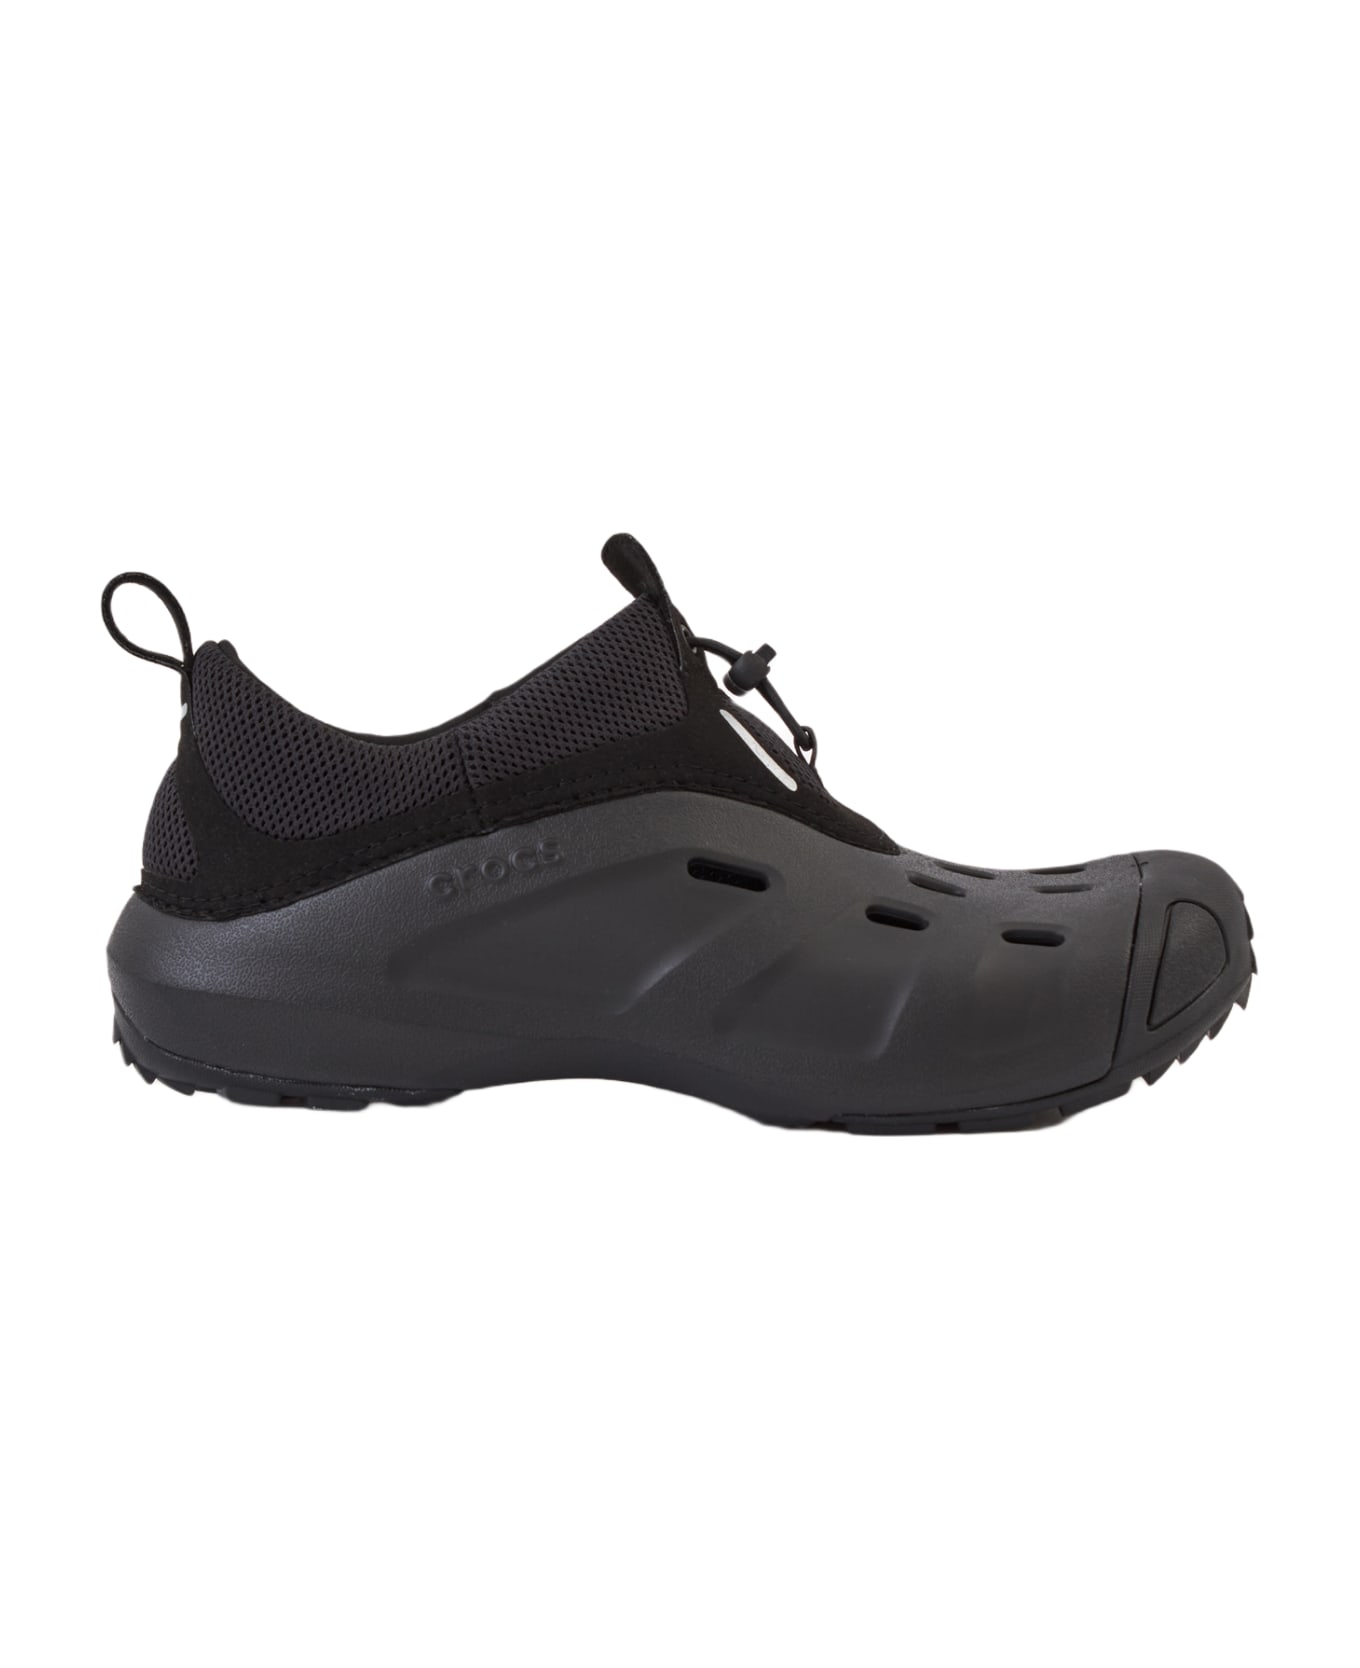 Crocs Quick Trail Low Shoes - black スニーカー